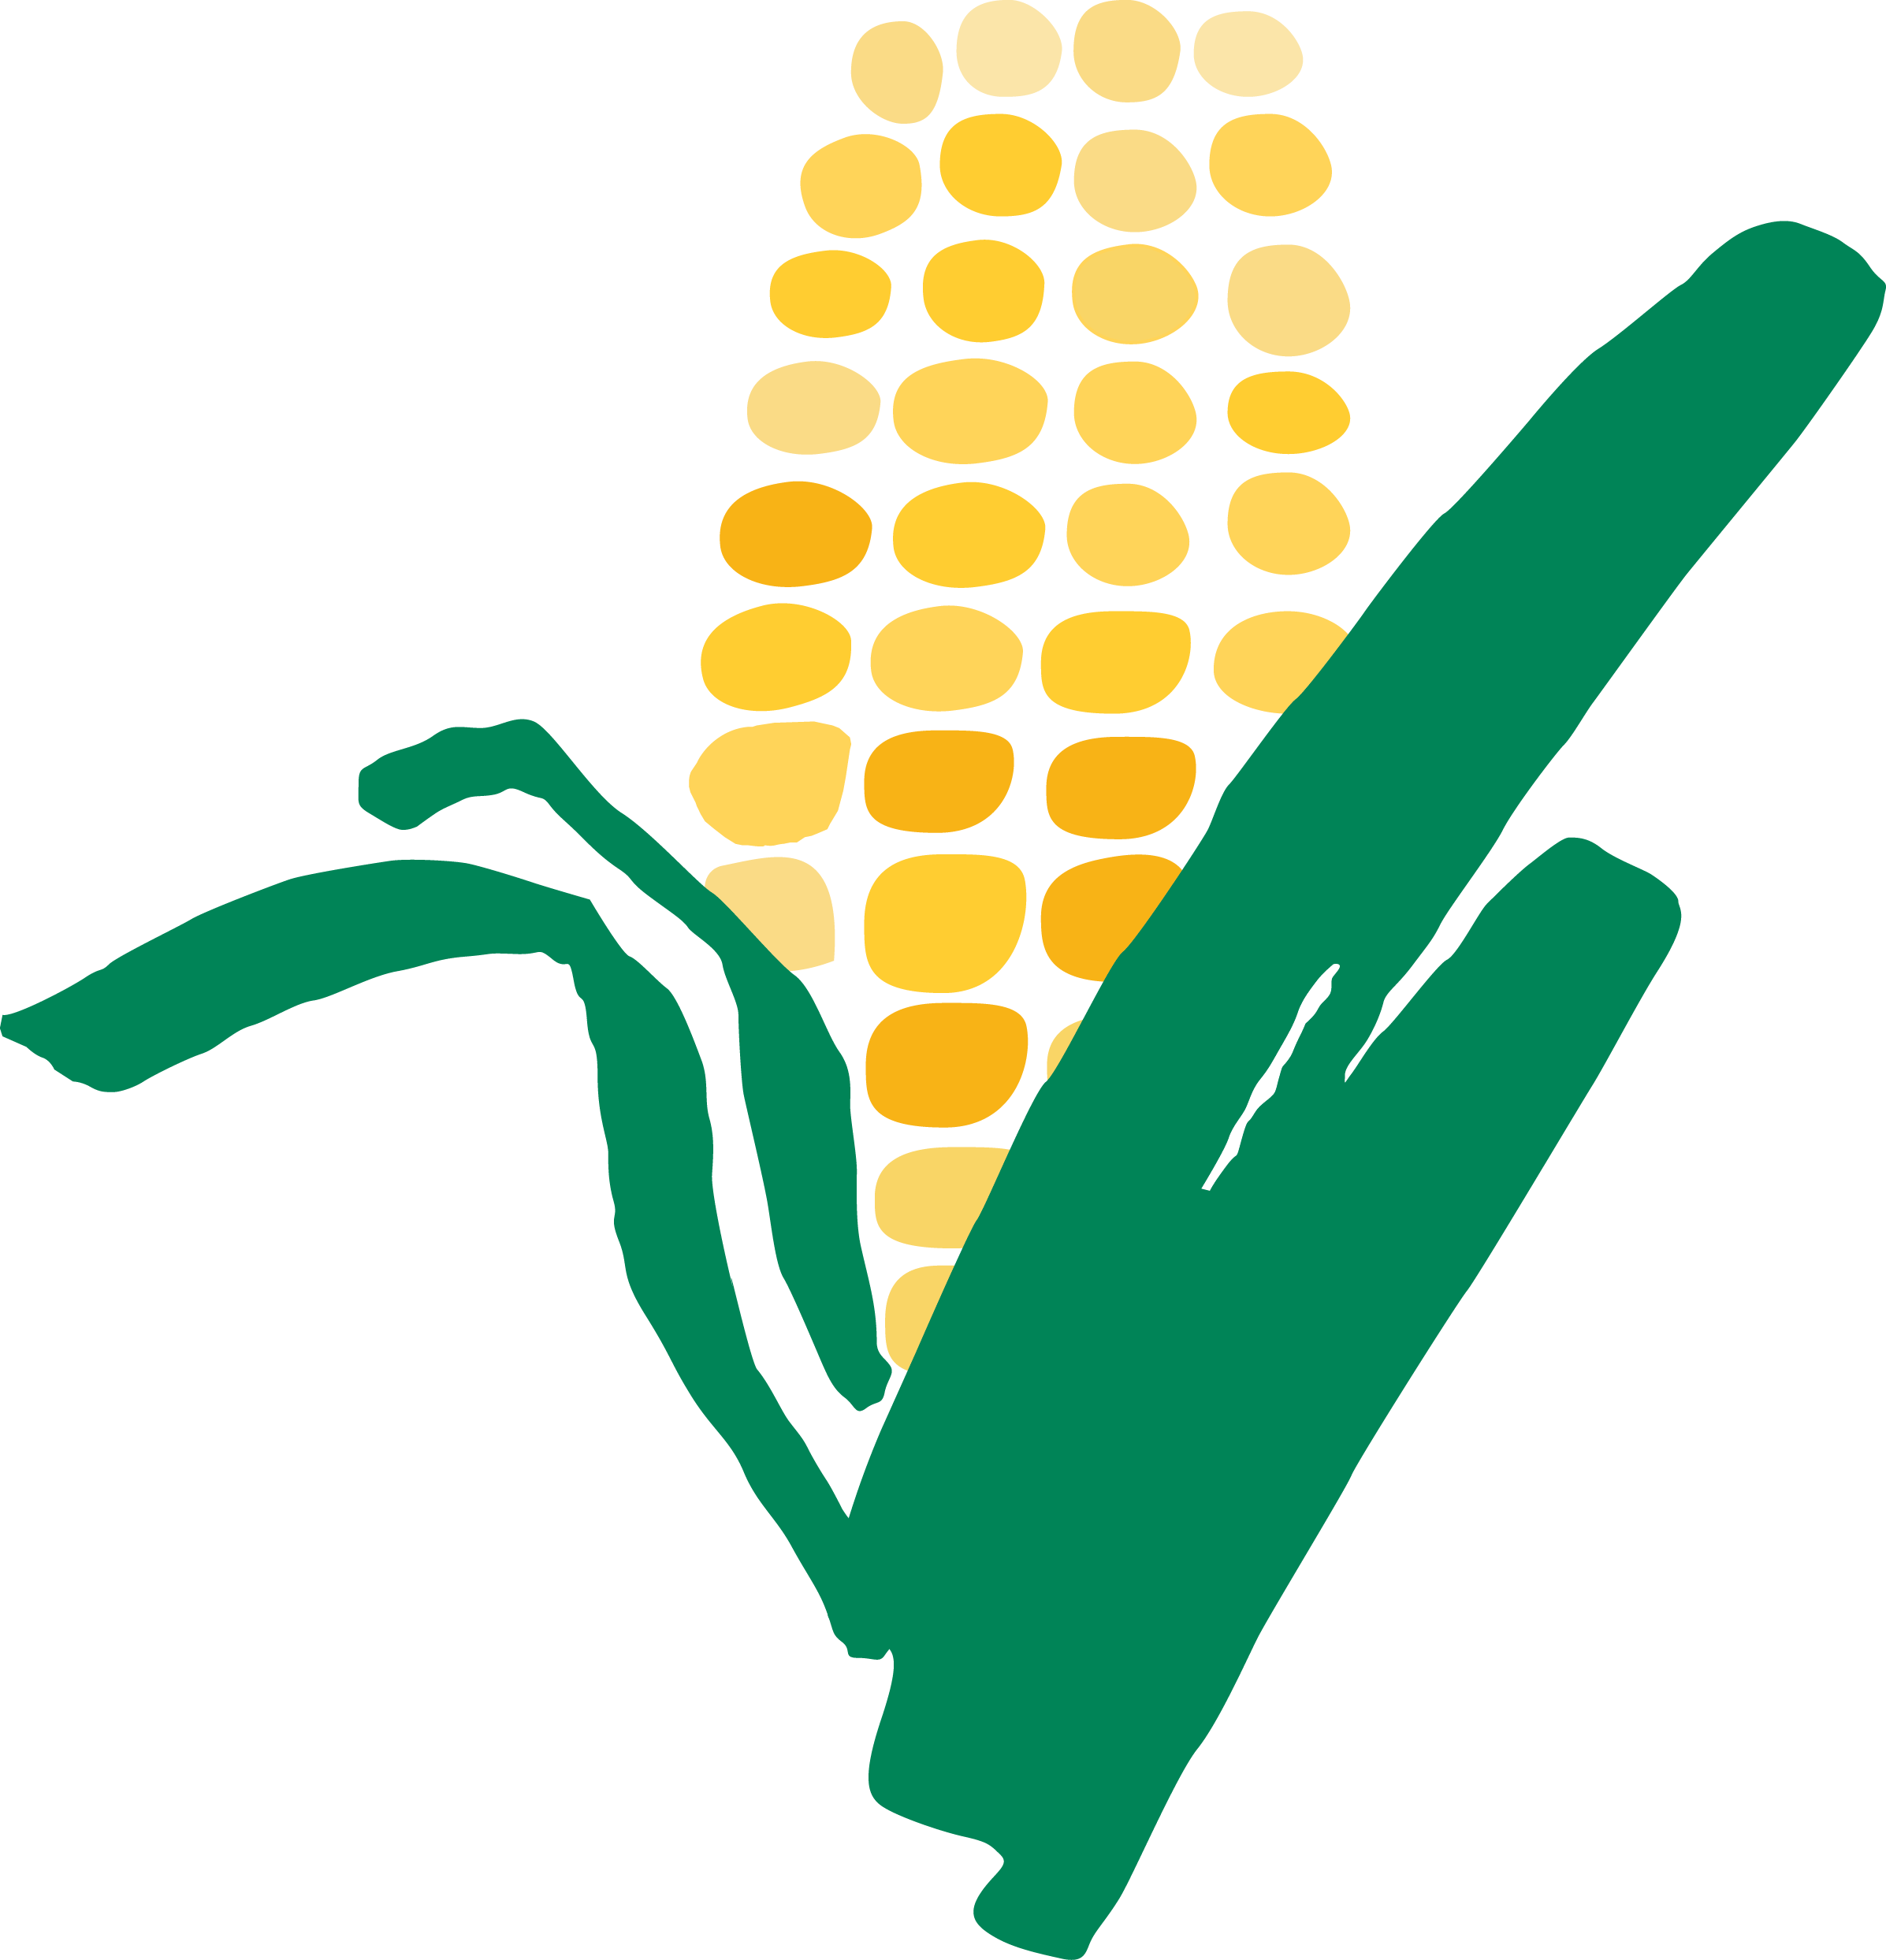 Corn - Food Bank Of South Jersey (2393x2487)